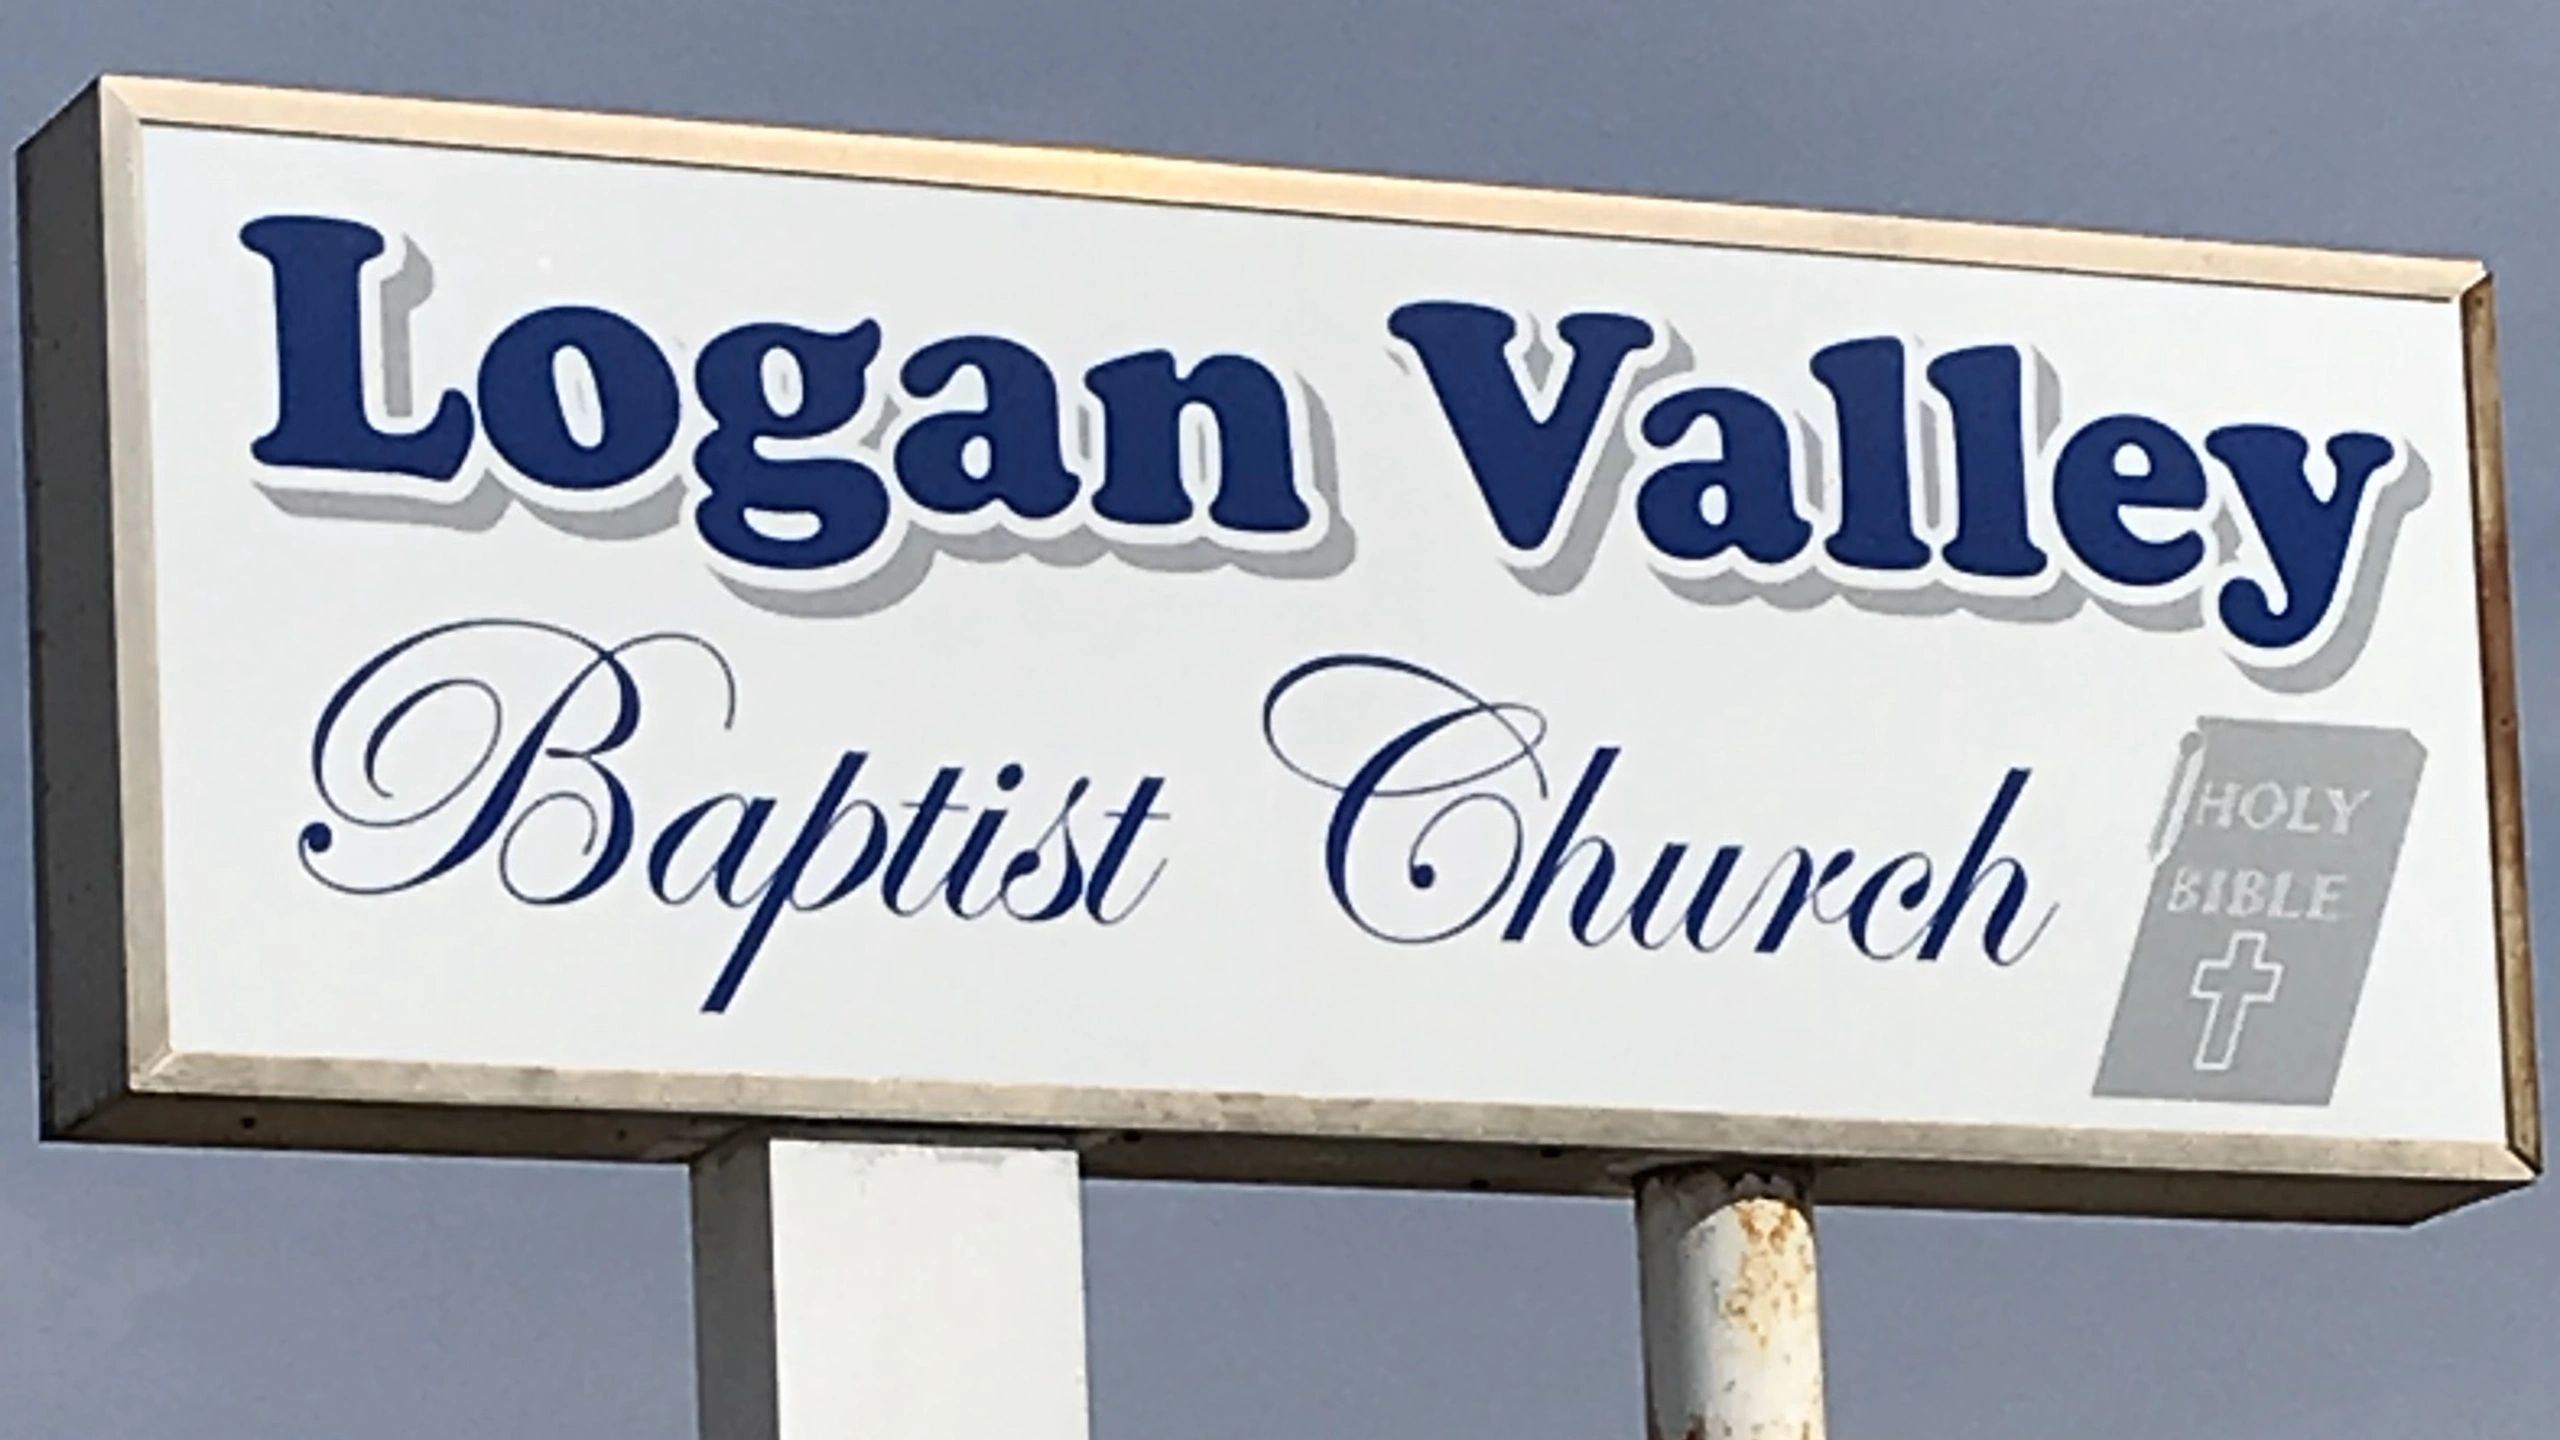 Logan Valley Baptist Church outdoor sign